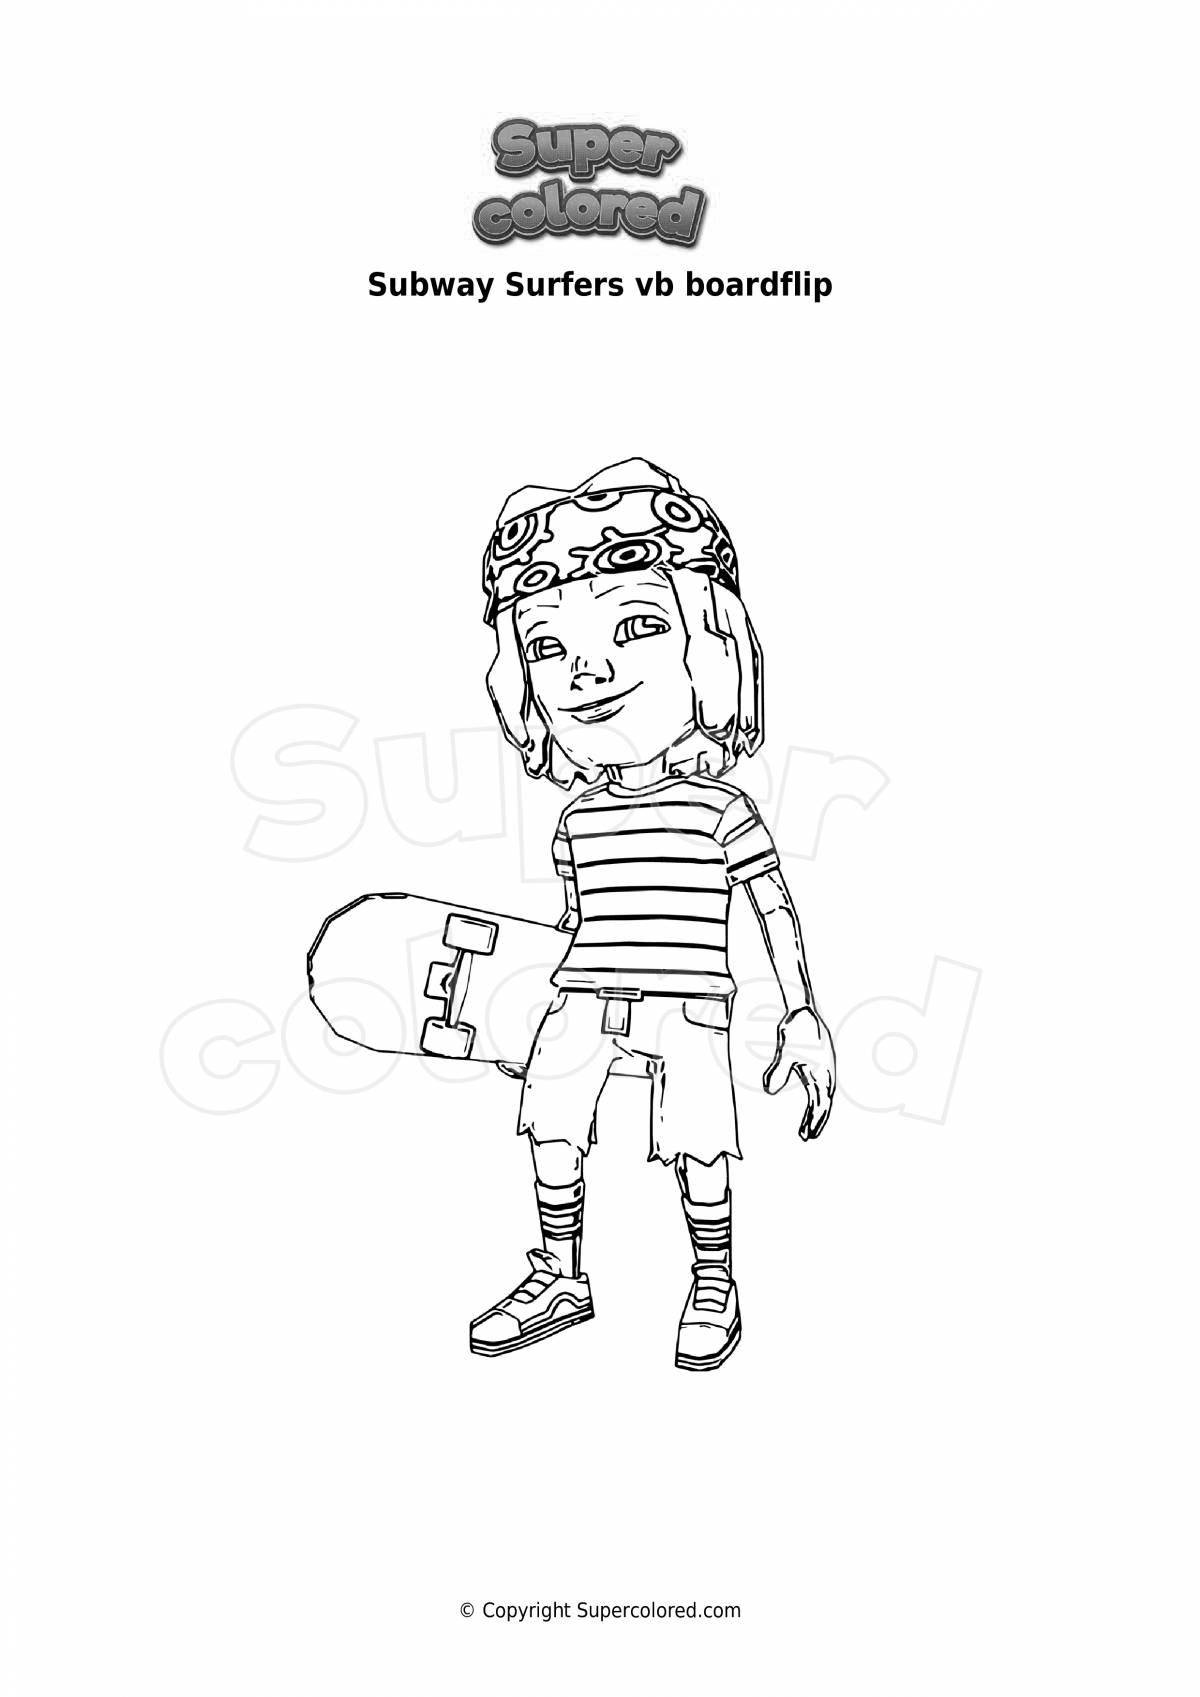 Subway surfers explosive coloring book